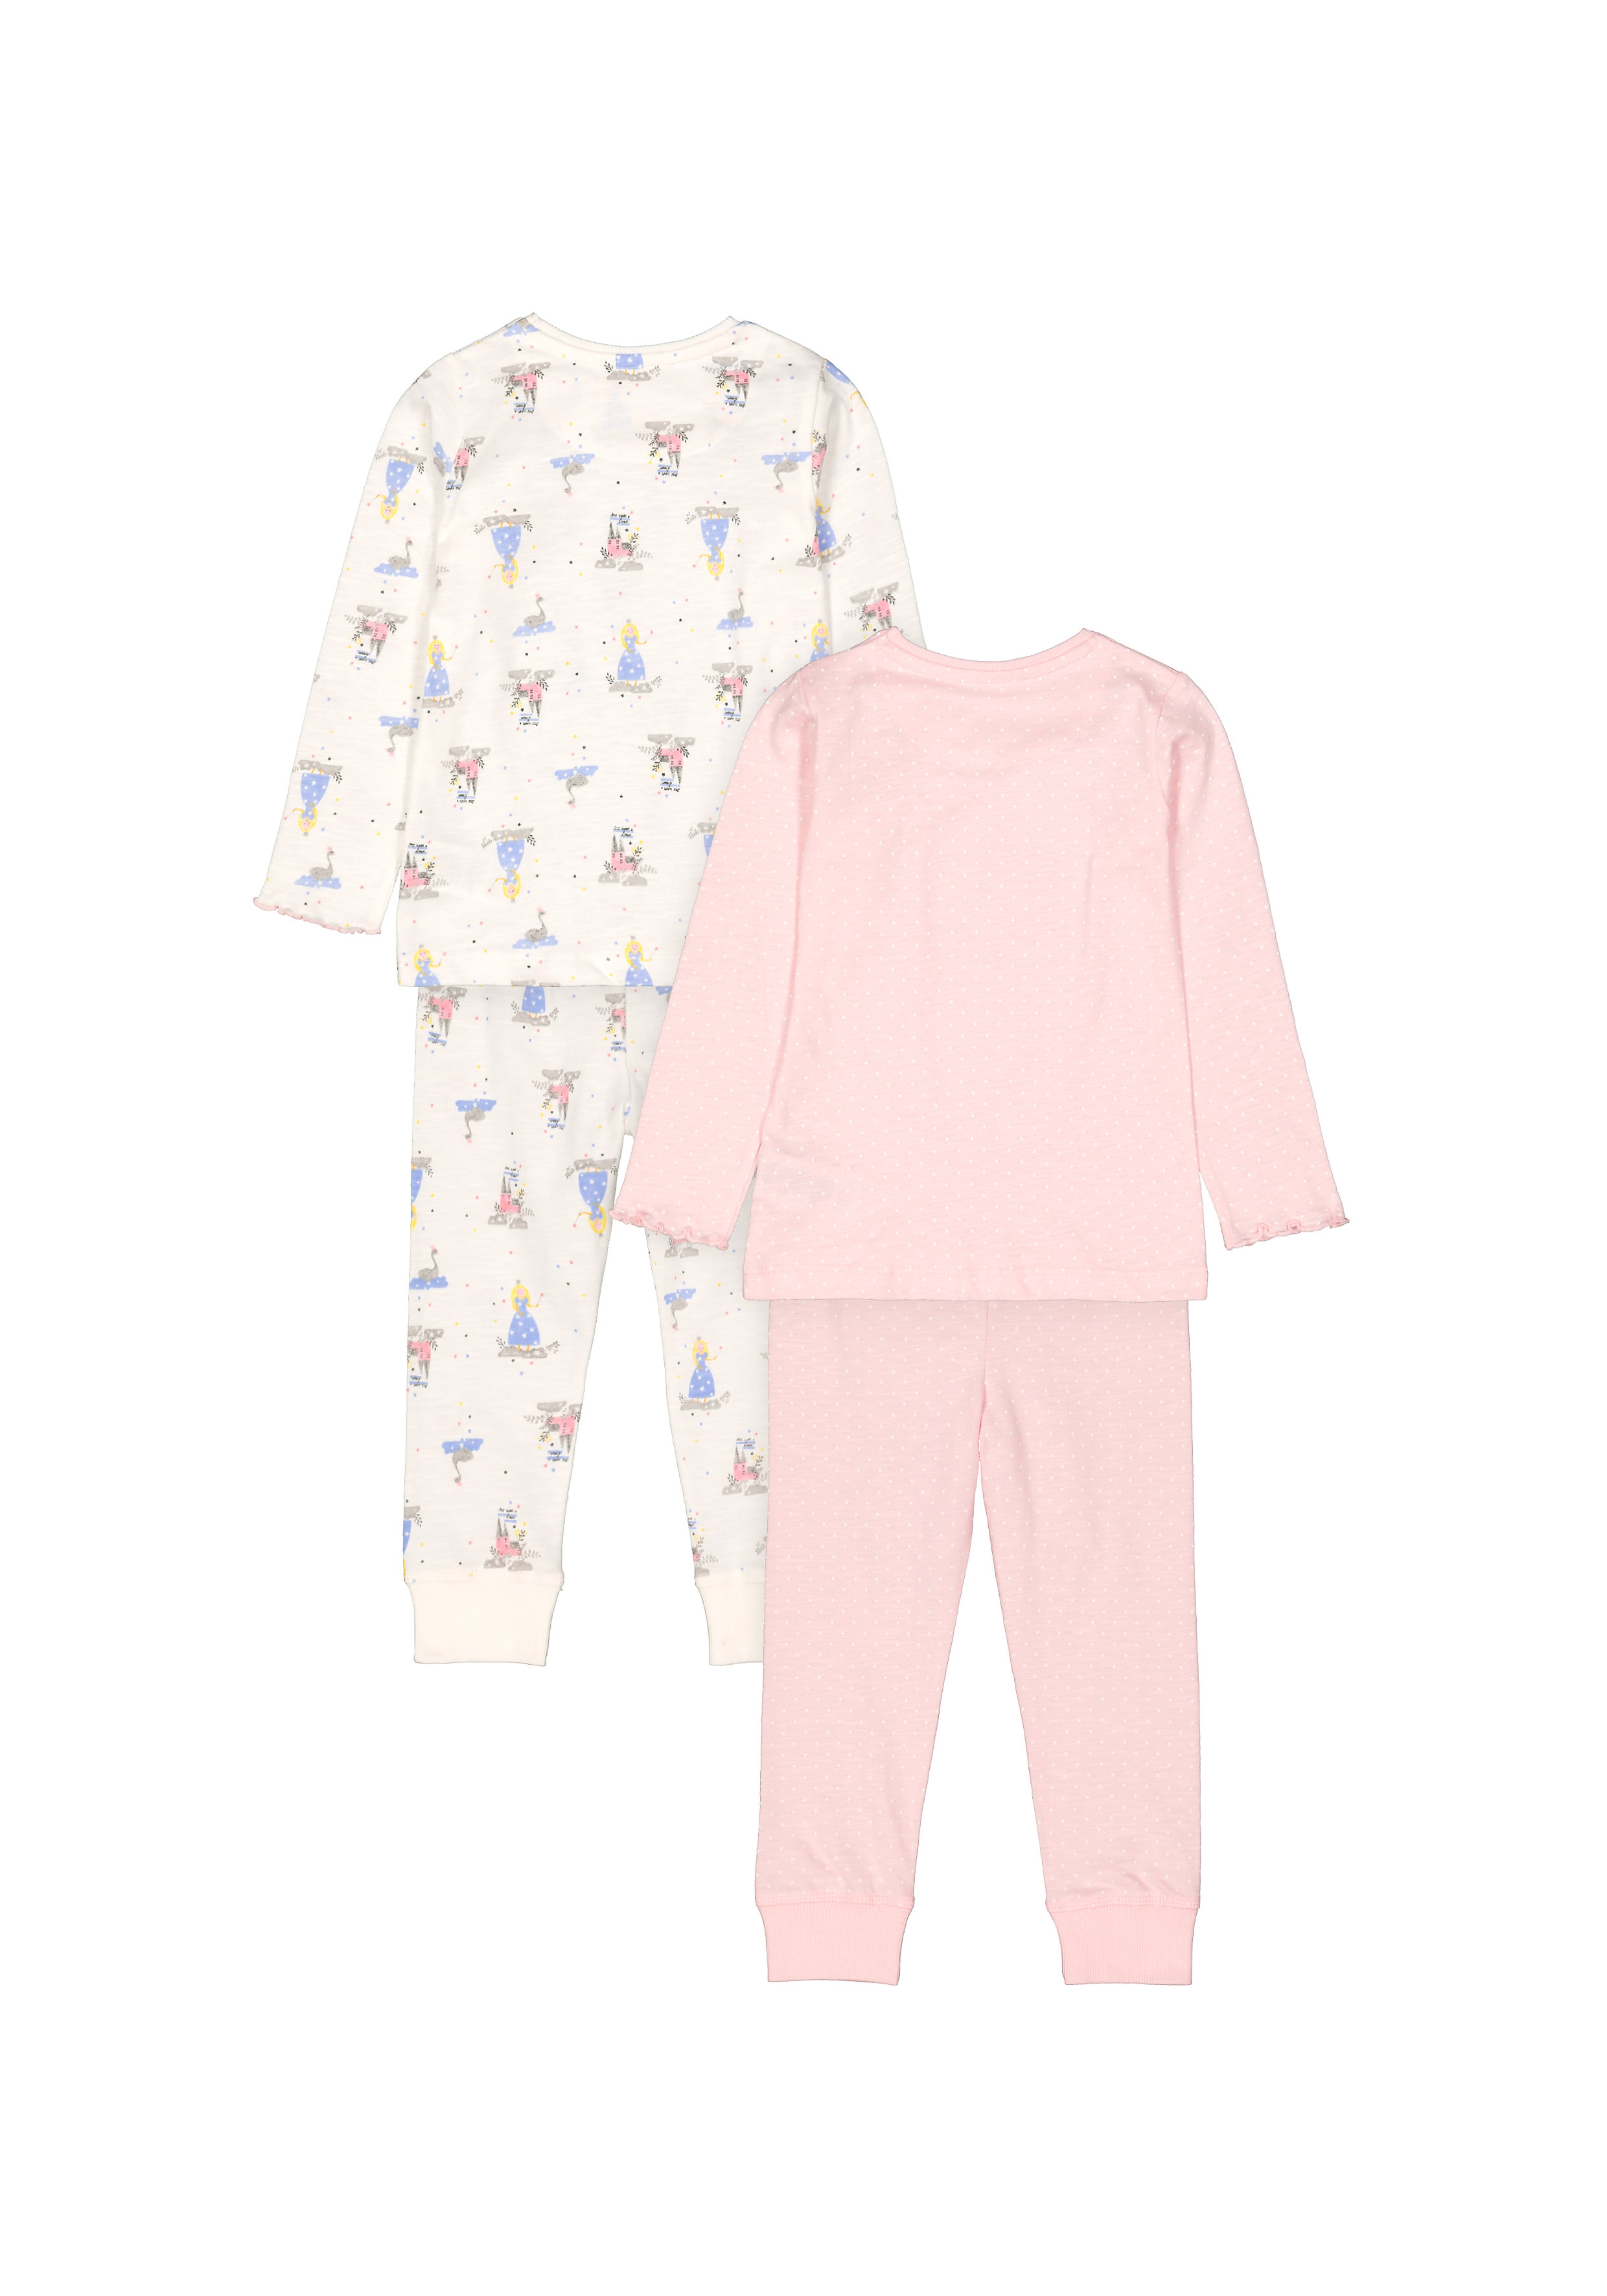 Mothercare | Girls Full Sleeves Pyjama Set Fairytale Print - Pack Of 2 - Pink Cream 1